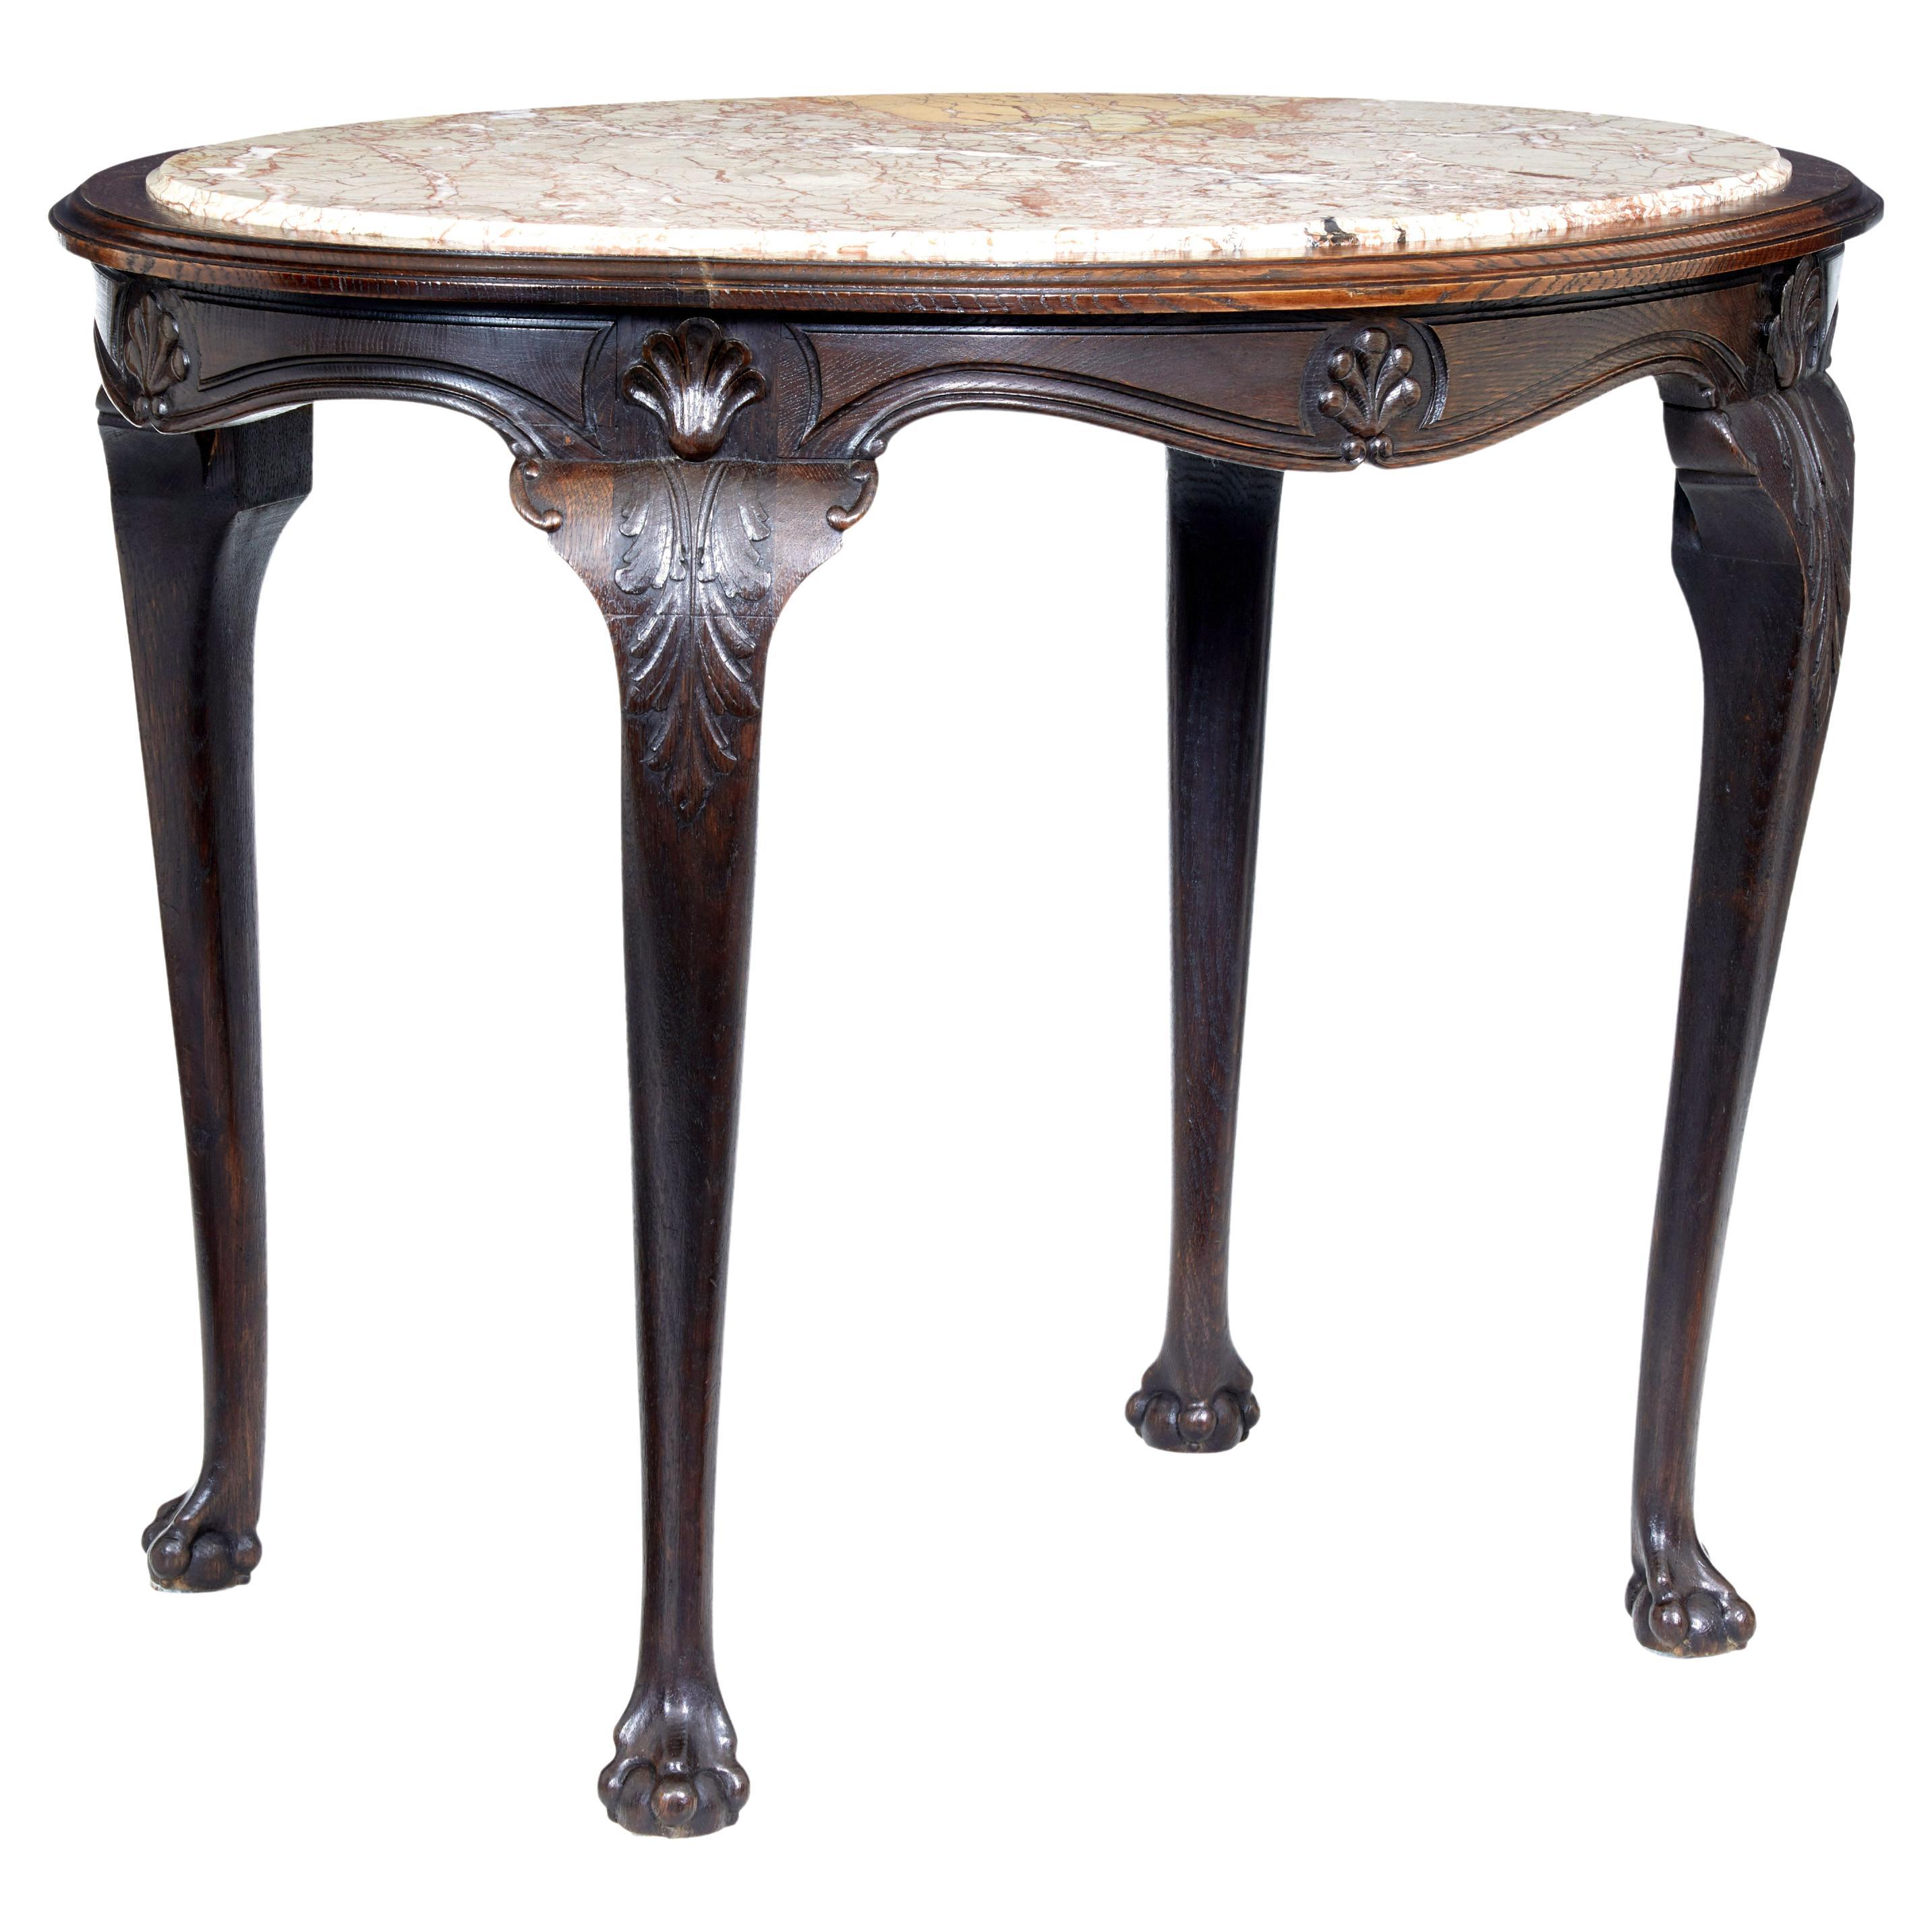 19th century French art nouveau oak marble top table For Sale